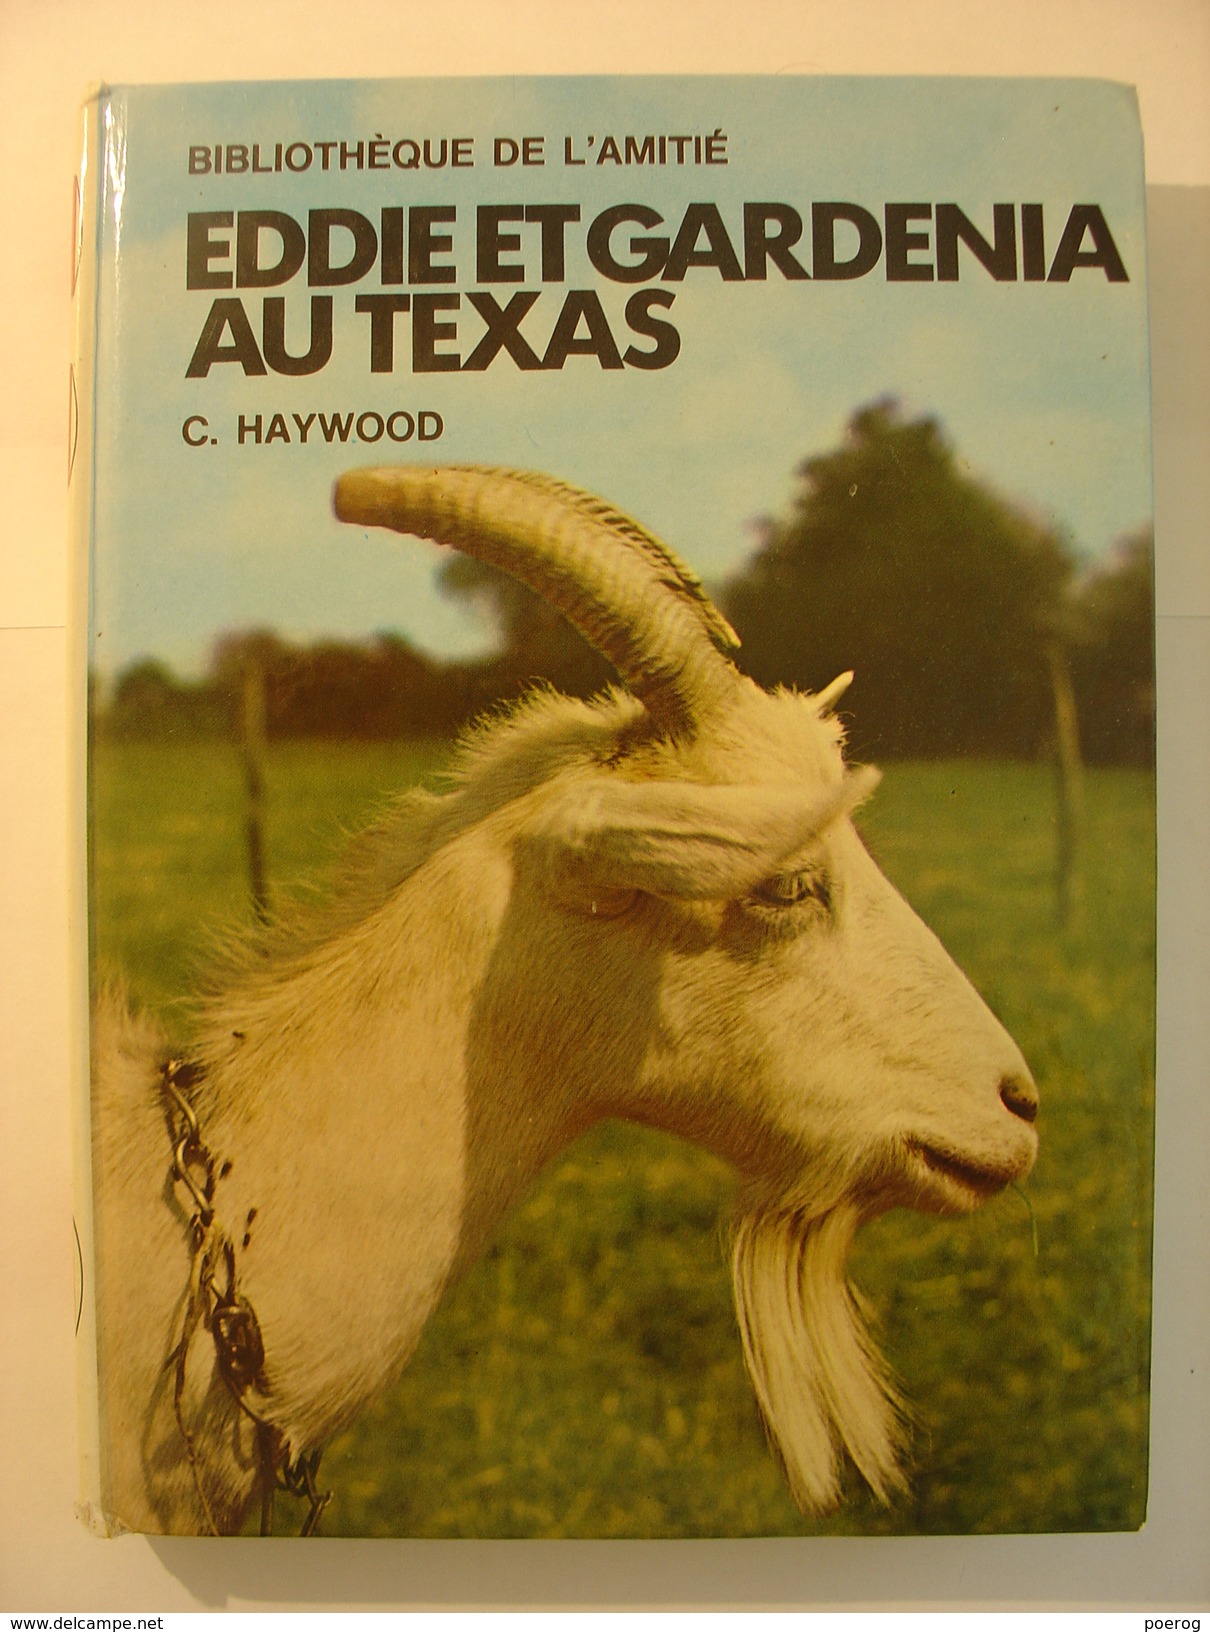 EDDIE ET GARDENIA AU TEXAS - C. HAYWOOD - Bibliothèque De L' Amitié - 1976 - Illustrations HARISPE - Chèvre - Bibliothèque De L'Amitié